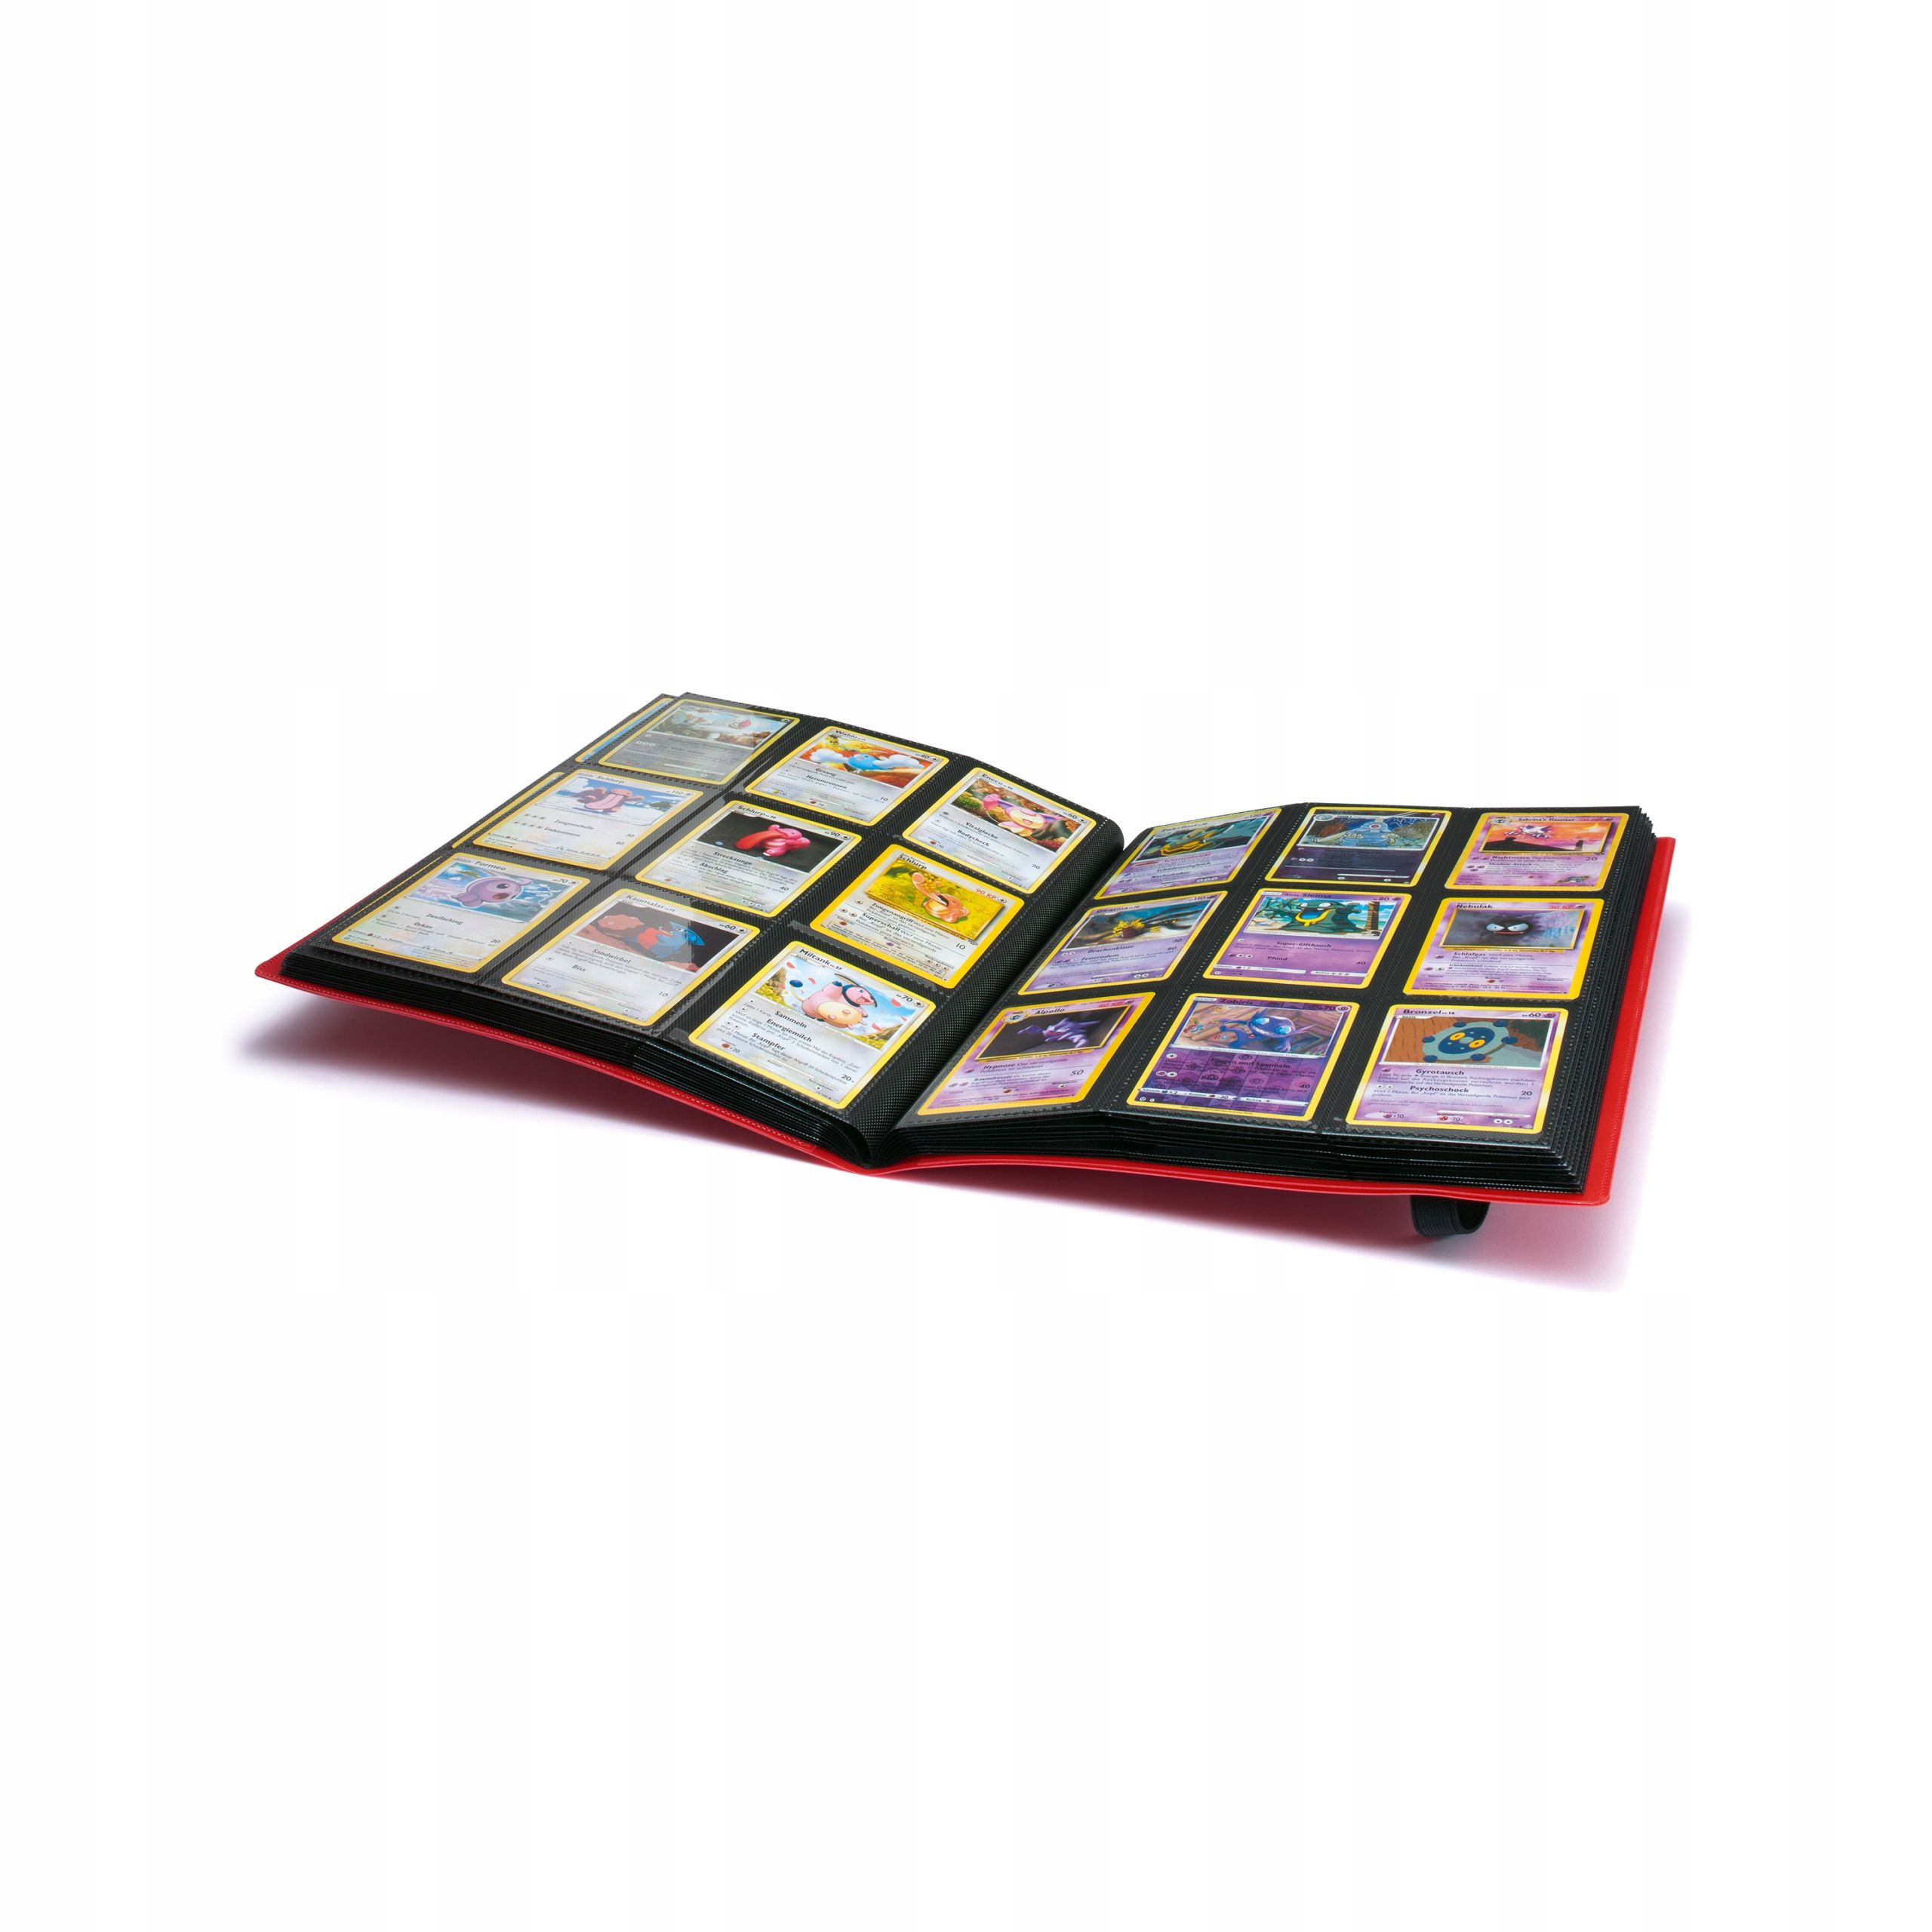 klaser album na 360 kart pokemon fantasy i inne - slim gaming